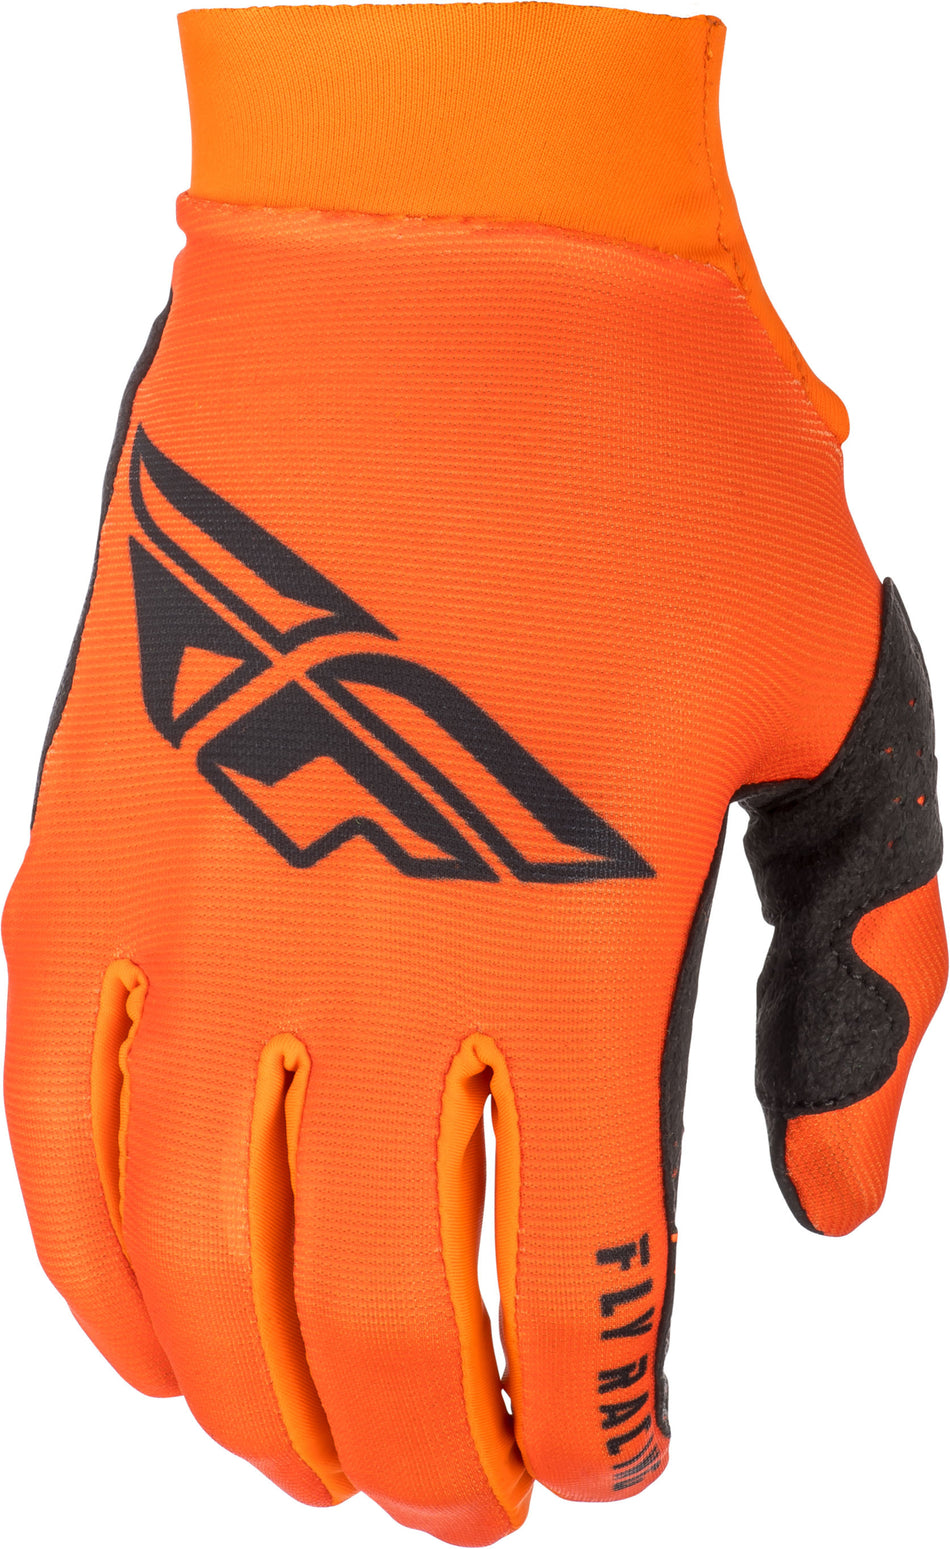 FLY RACING Pro Lite Gloves Orange/Black Sz 10 372-81710